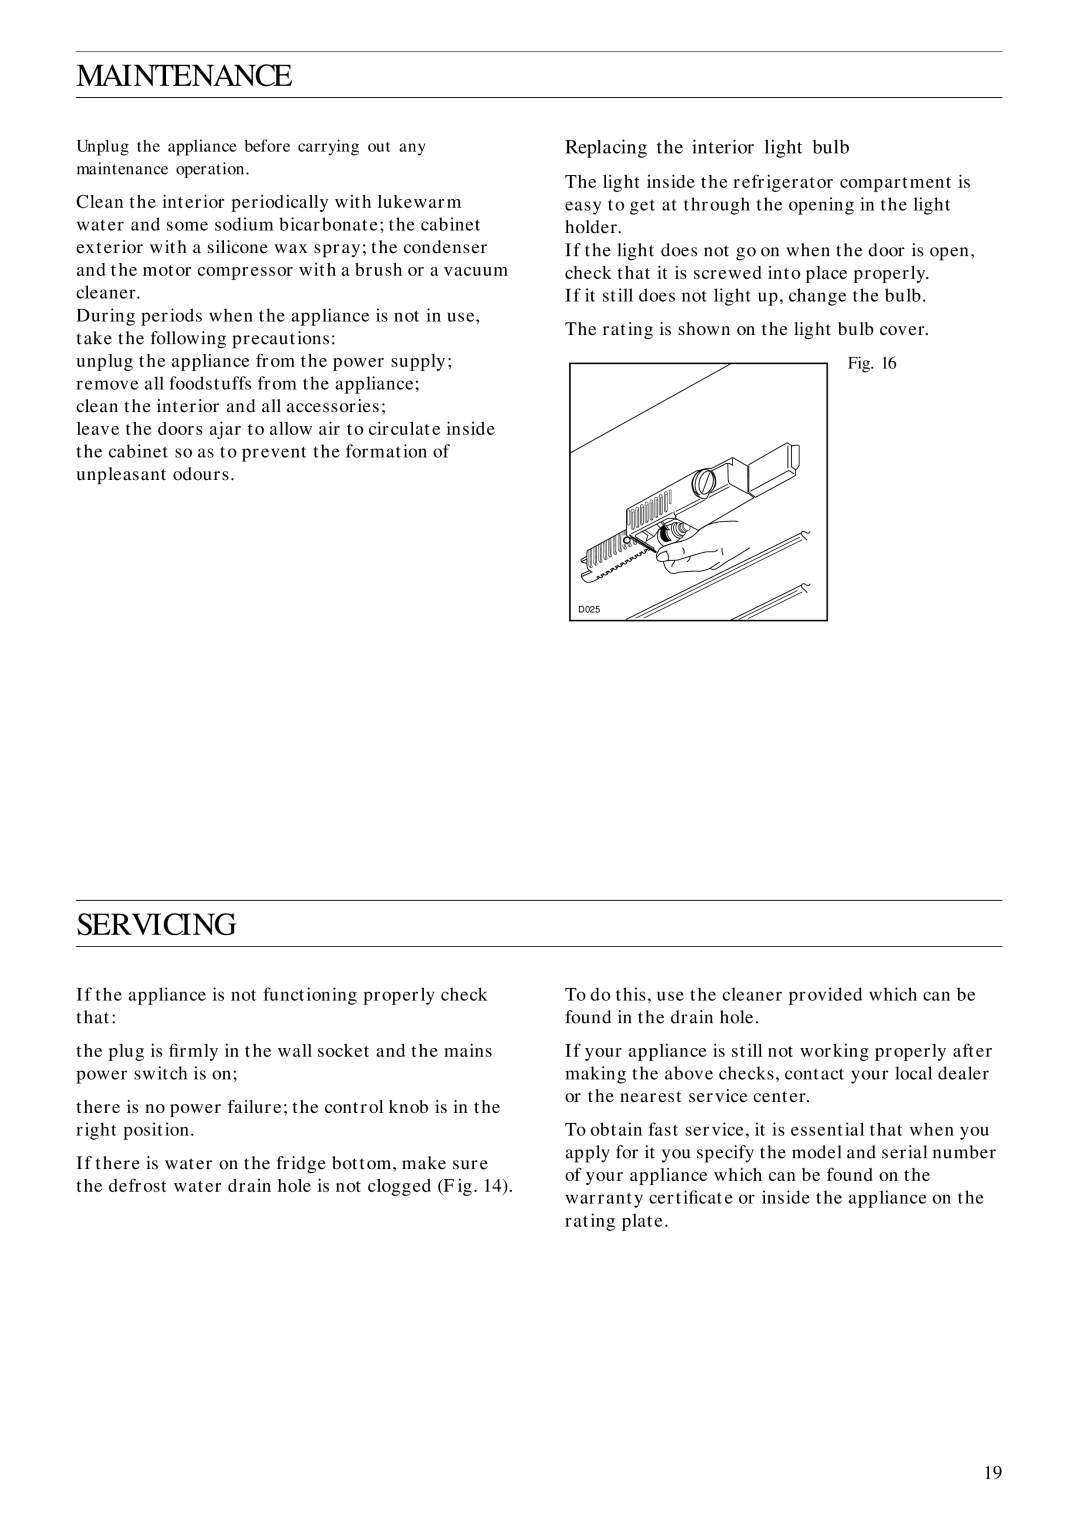 Zanussi ZI 428 D manual Maintenance, Servicing, Replacing the interior light bulb 